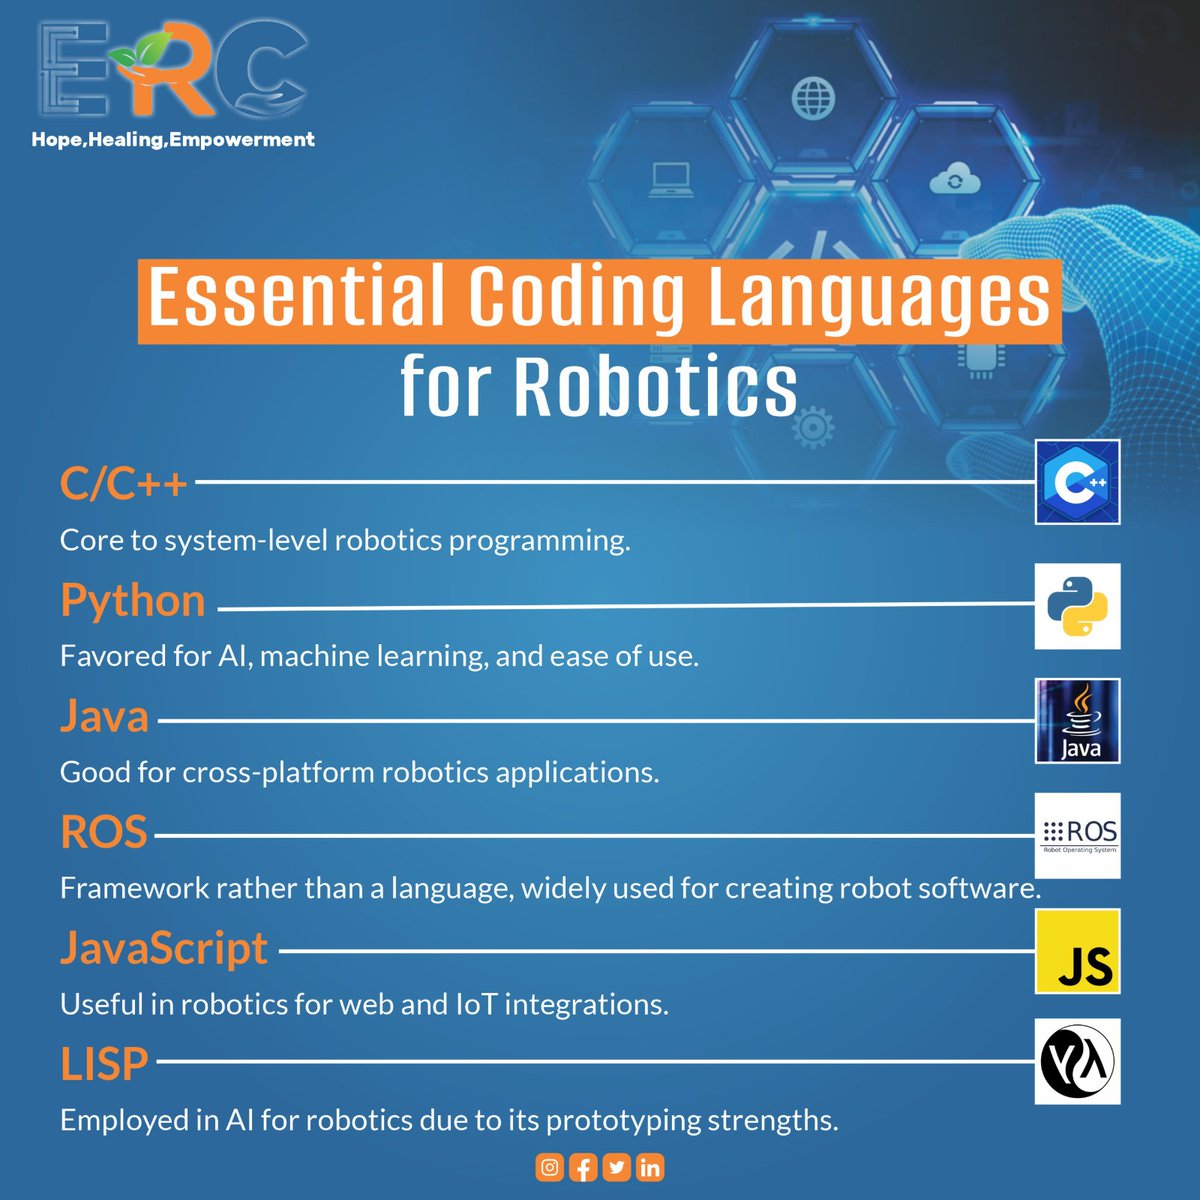 Essential coding languages for Robotics 
.
.
.
.
.
.
.
.
.
.
.
.
.
.
#ercpartnership #RoboticsEducation #STEMlearning #CLCinitiative #FutureOfTechnology #InnovateAndLearn #CodingAndRobotics #HolisticEducation #ChildrensLibraryComplex #RoboticsRevolution